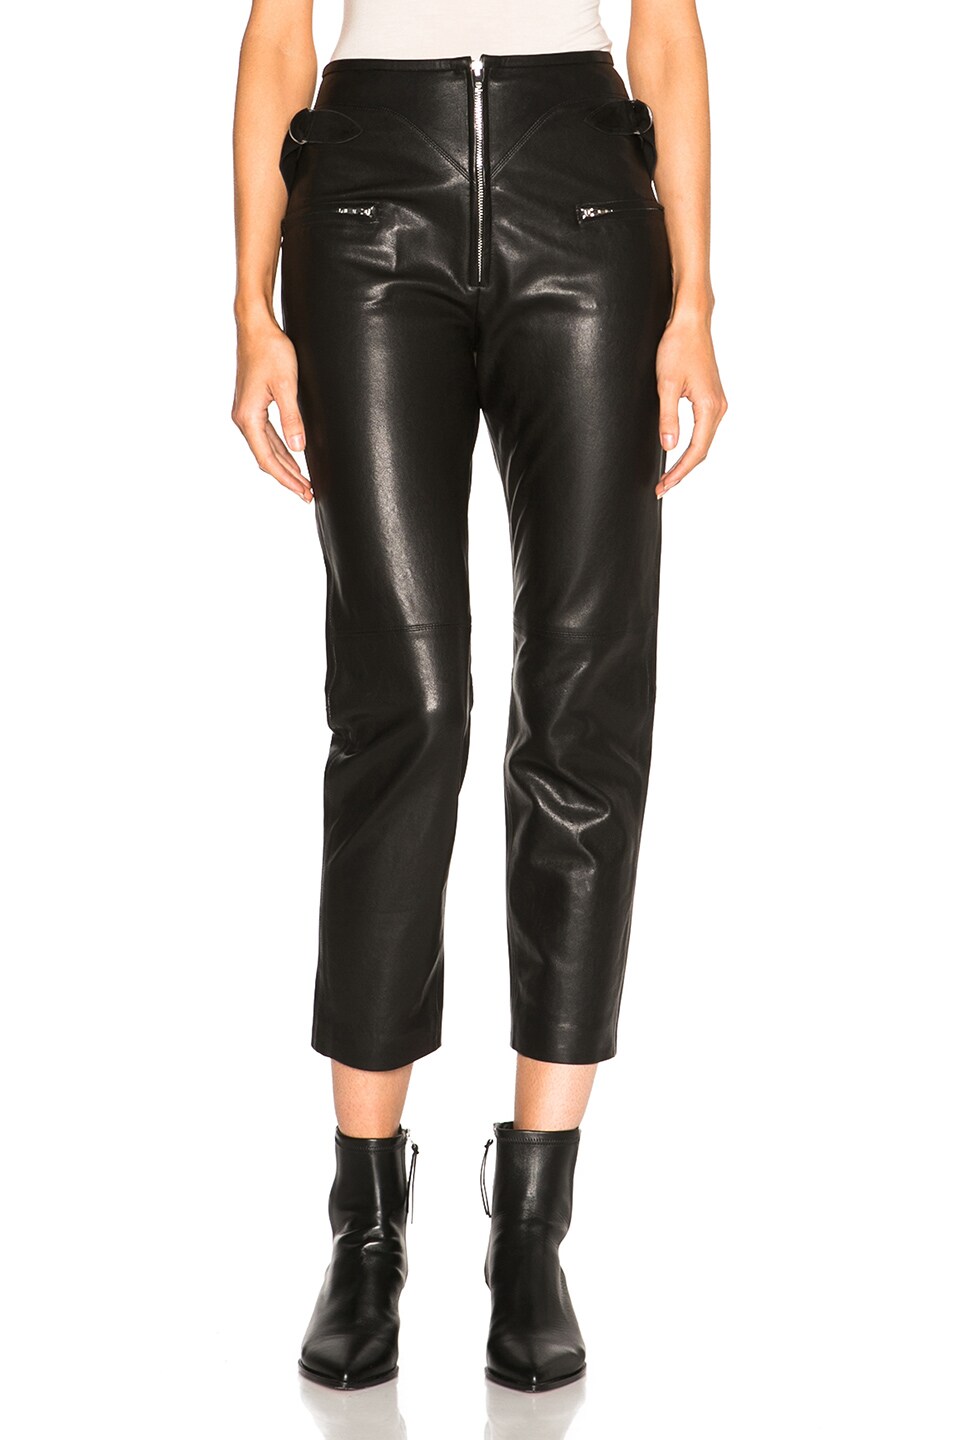 Isabel Marant Florrie Leather Pants in Black | FWRD